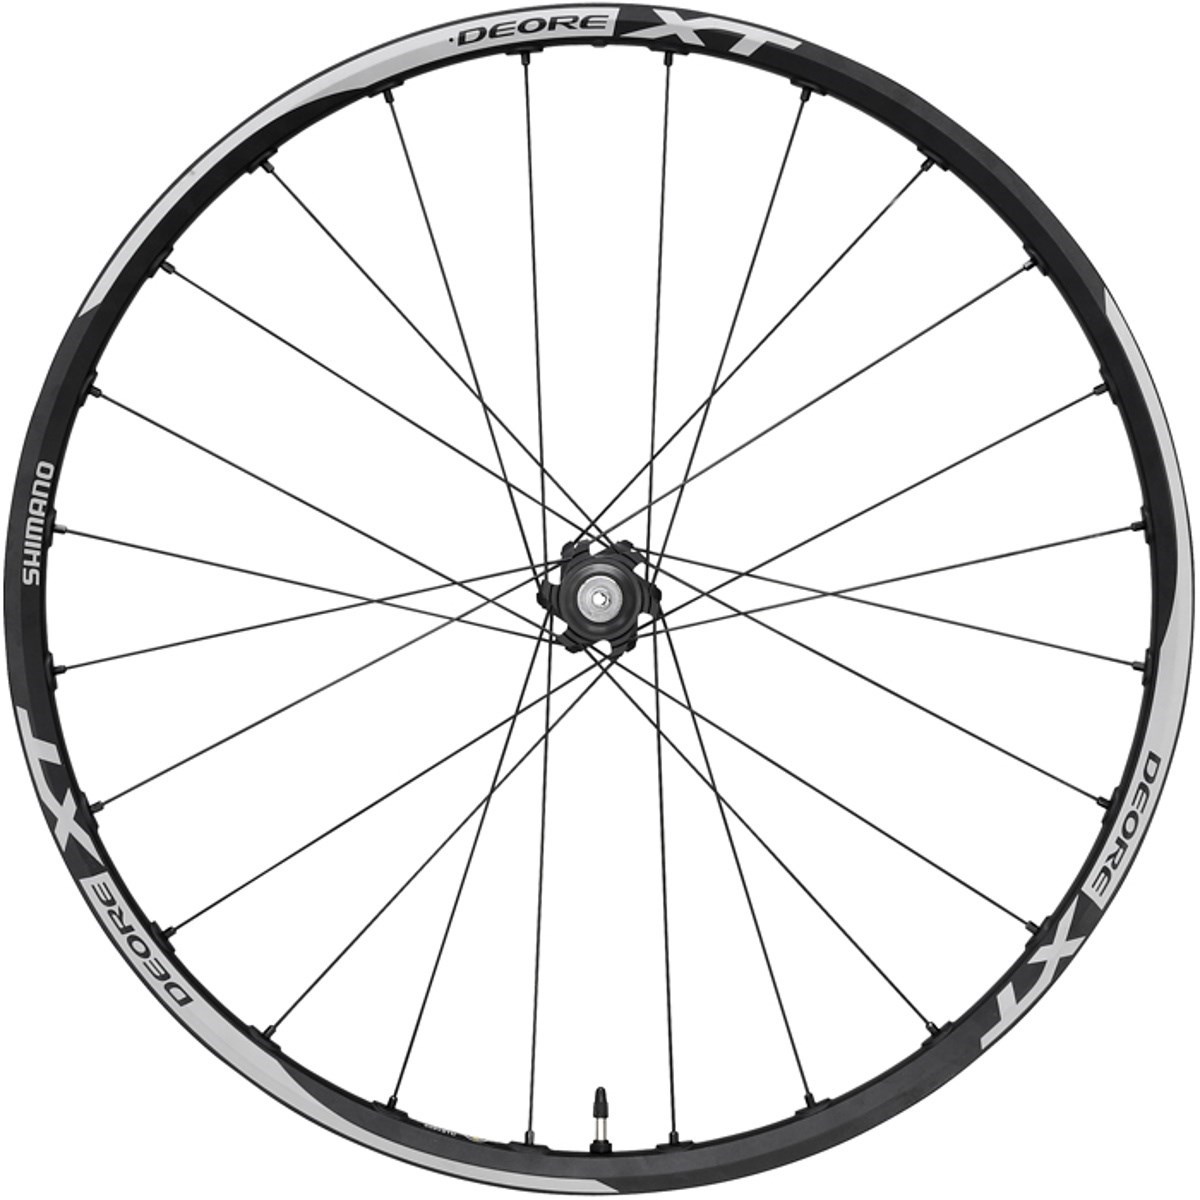 Shimano WH-M785 XT Q/R Front MTB Wheel product image